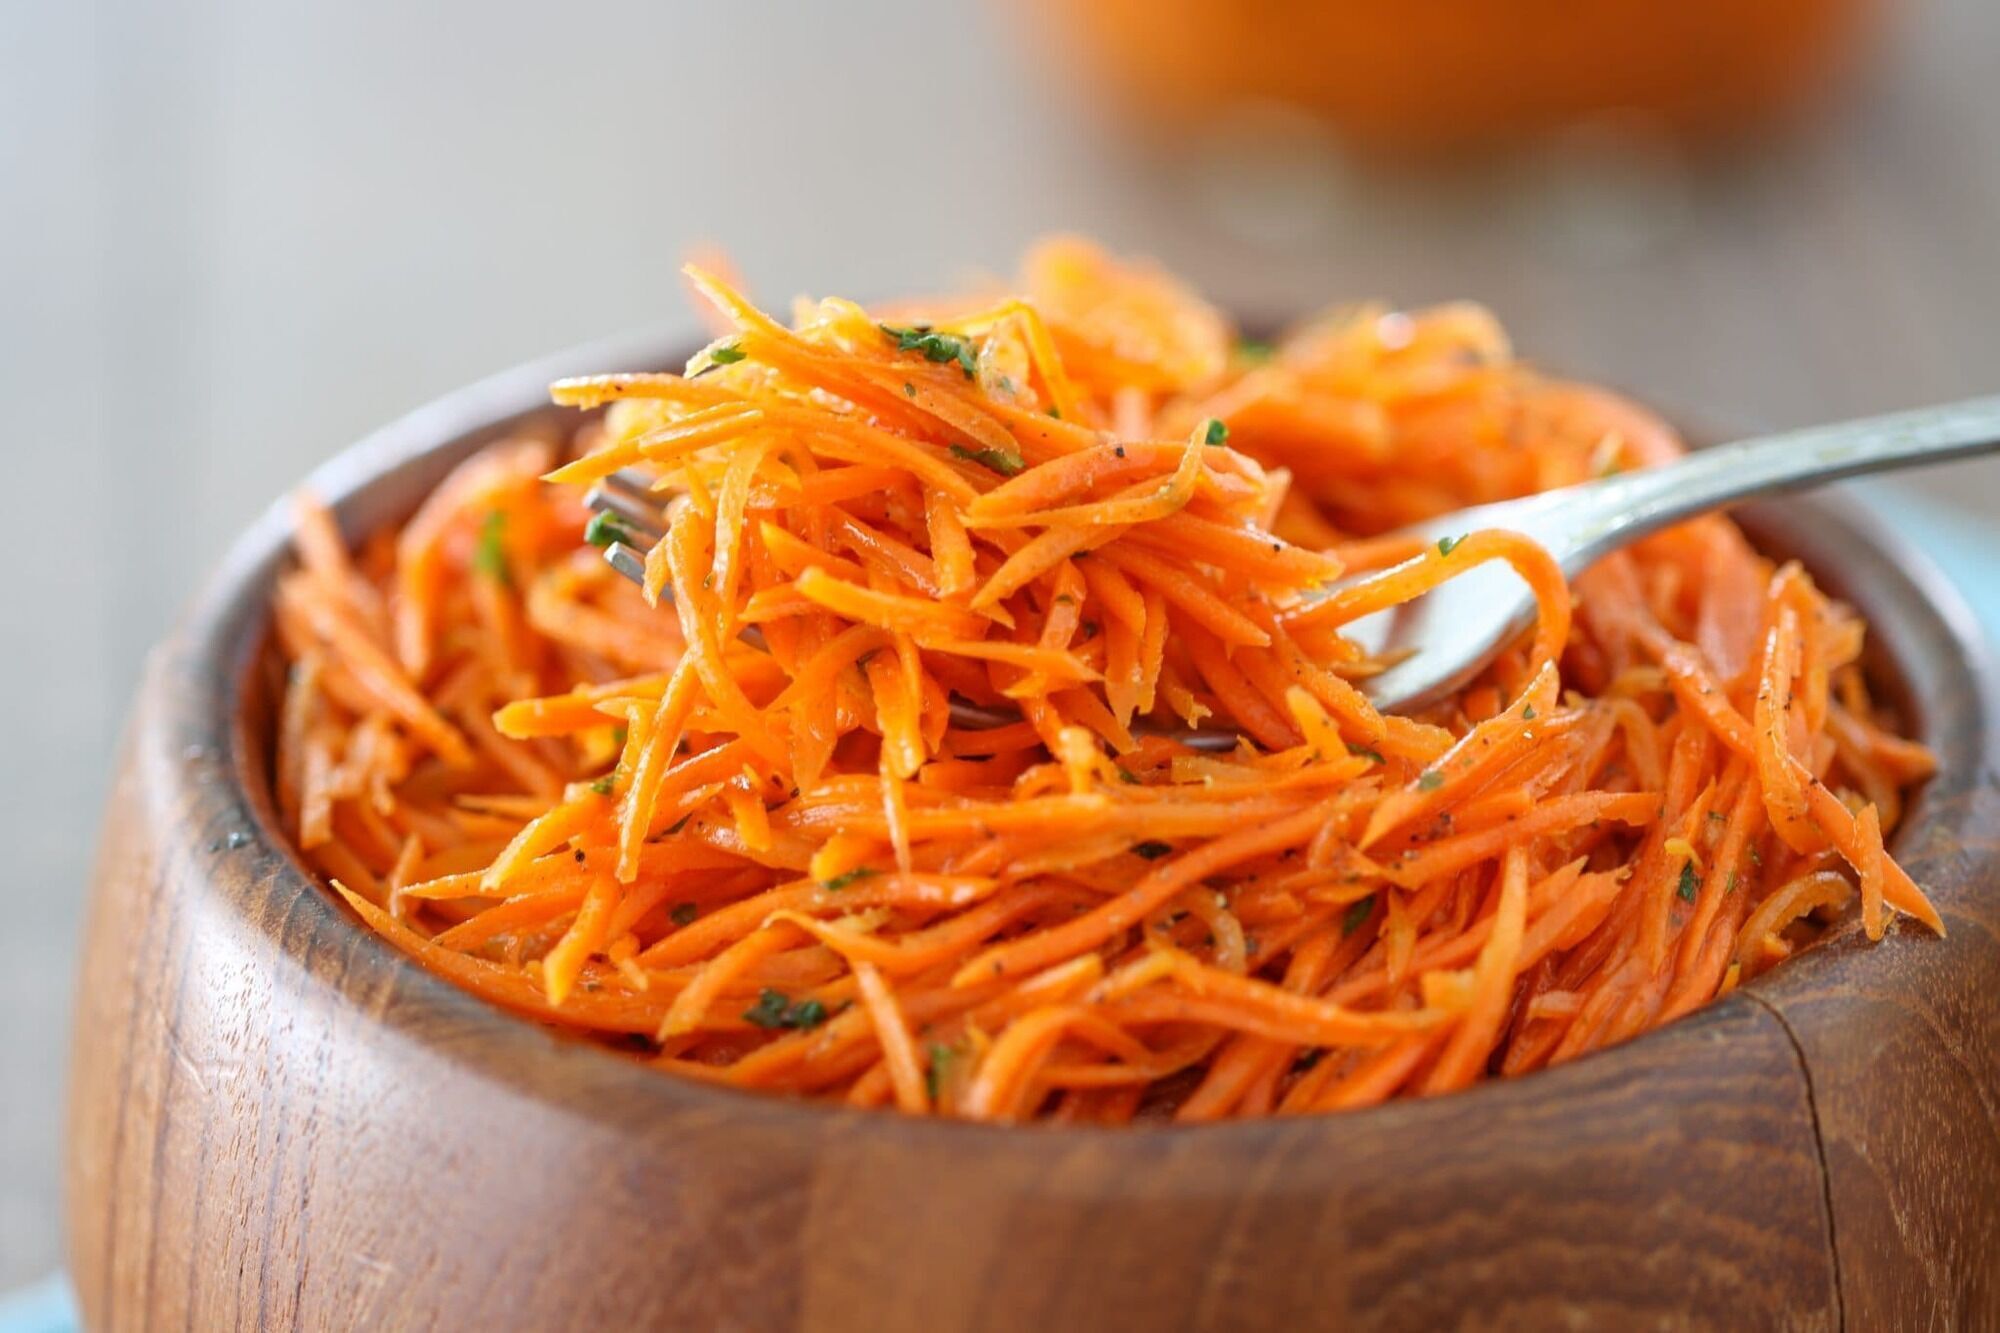 Delicious Korean-style carrots